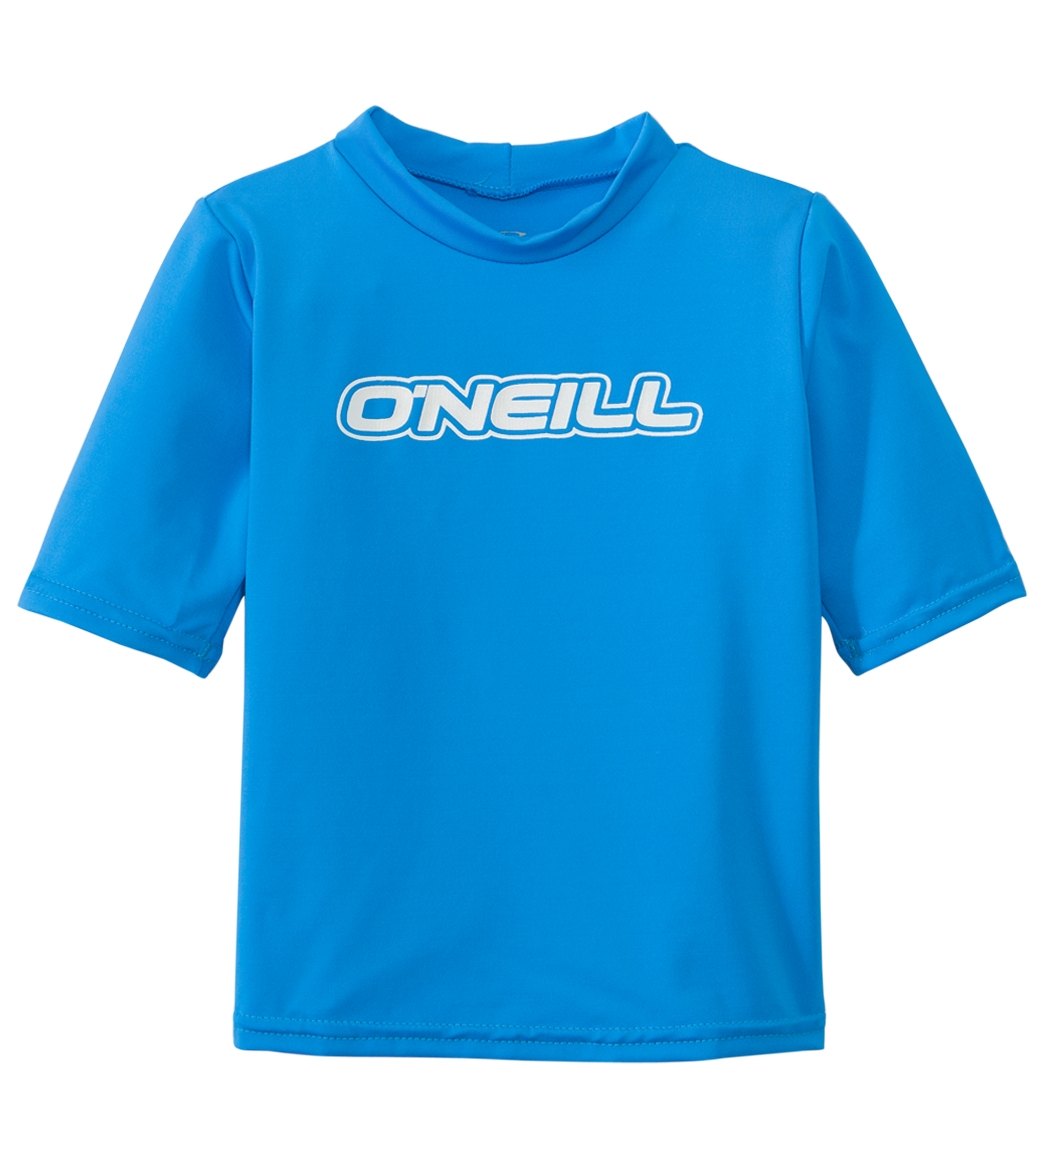 O'neill Toddler Basic Skins Short Sleeve Shirt Rash Tee - Brite Blue 1T Spandex - Swimoutlet.com